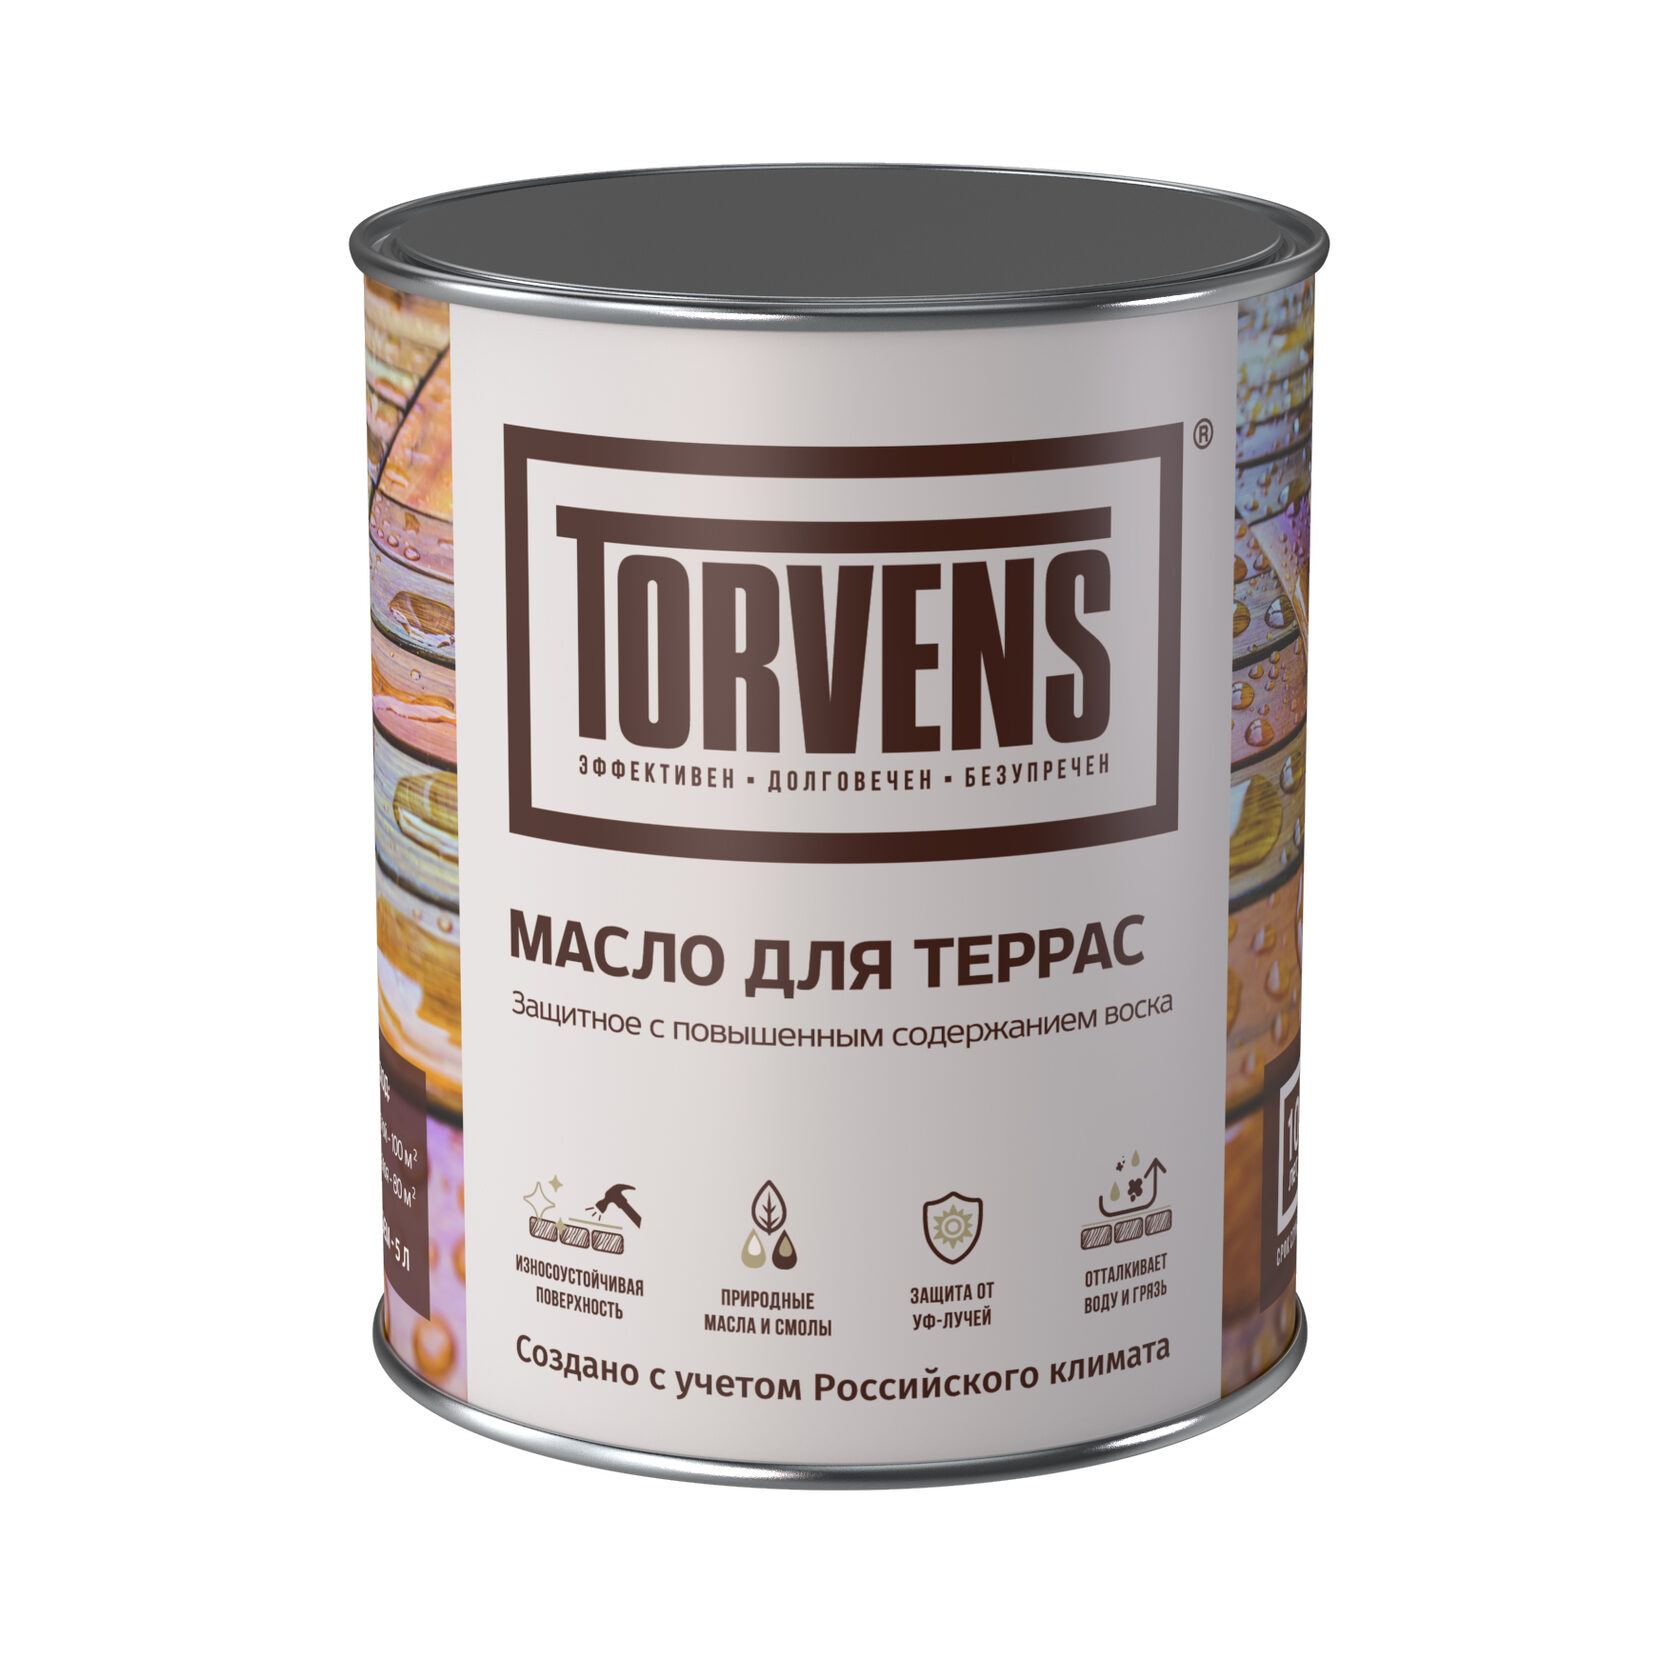 Купите масло для террас «TORVENS».